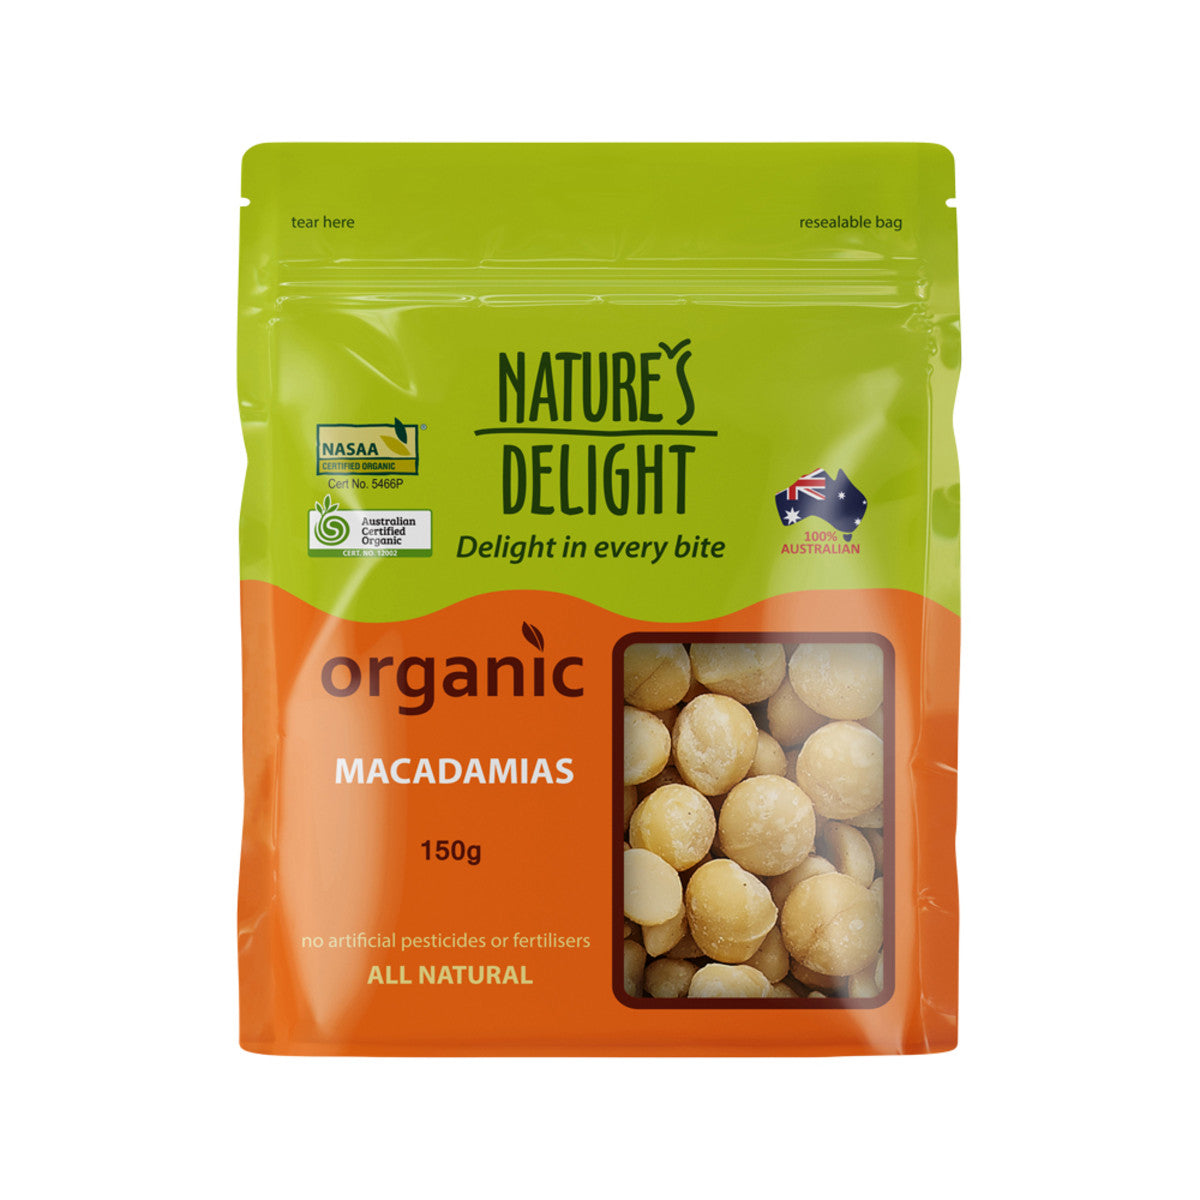 NATURE'S DELIGHT Organic Macadamias 150g